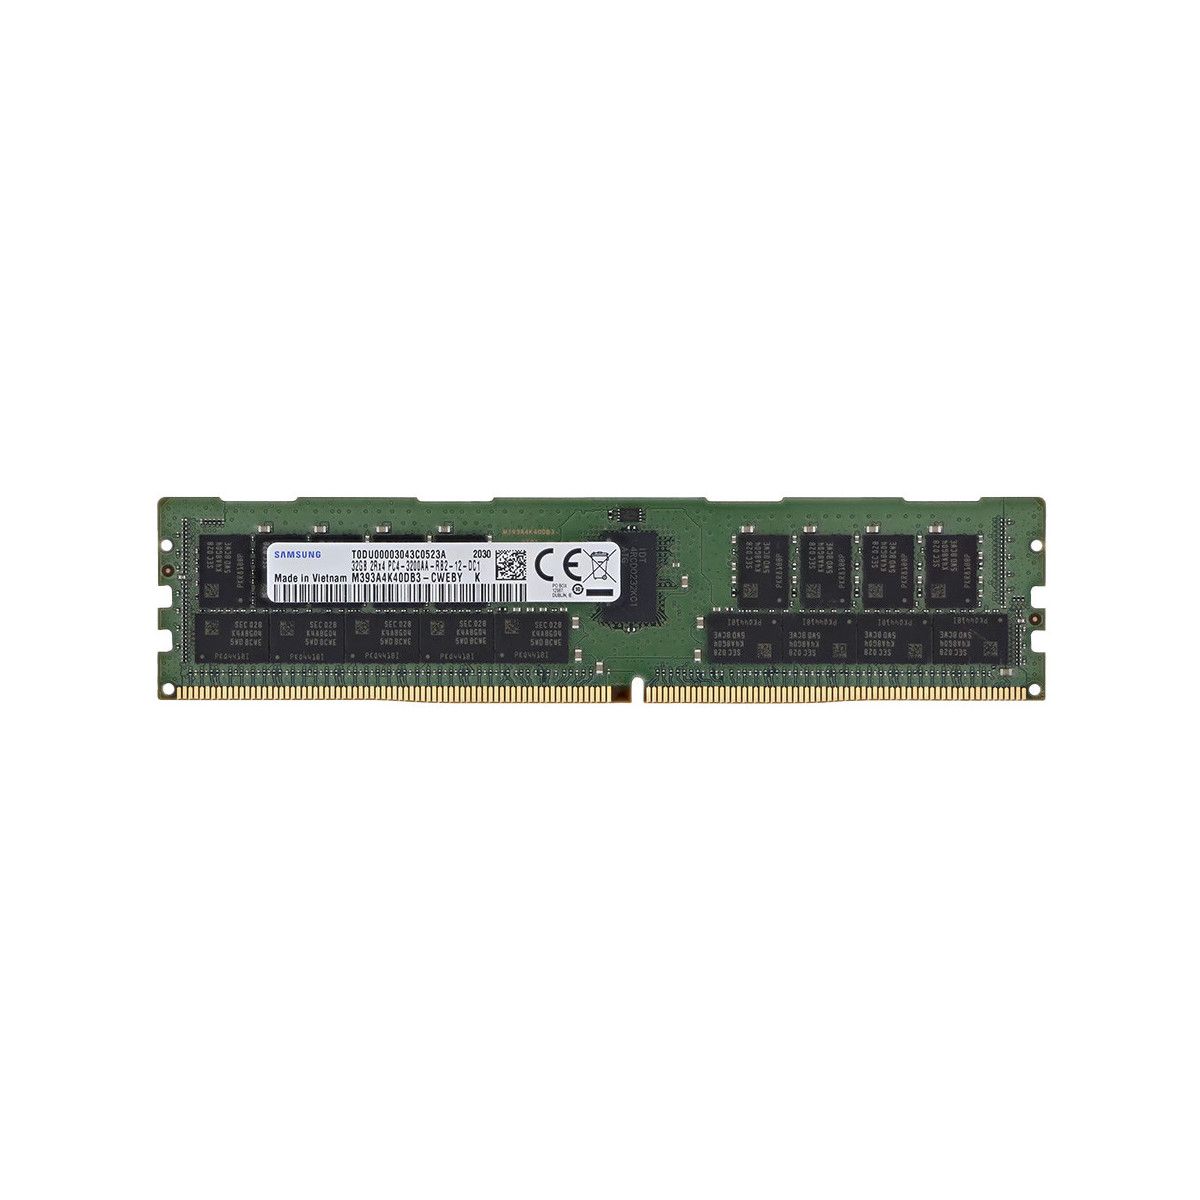 UCS-MR-X32G2RW-MS - Memstar 1x 32GB DDR4-3200 RDIMM PC4-25600R - Memorie OEM compatibilă Mem-Star 1 - Memstar 